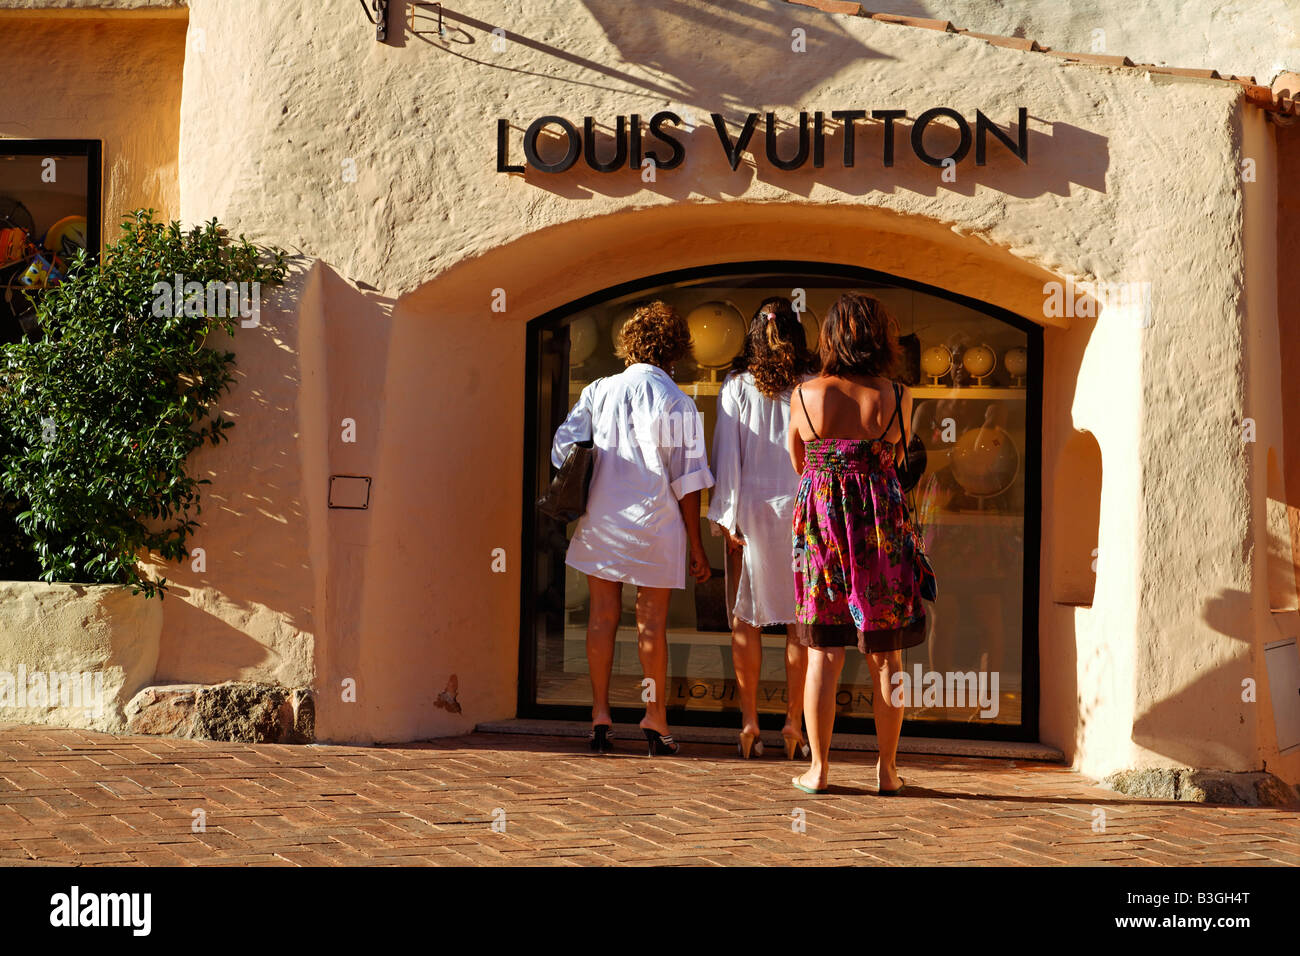 Italy Sardinia Costa Smeralda Porto Cervo Louis Vuitton shop in Stock Photo - Alamy